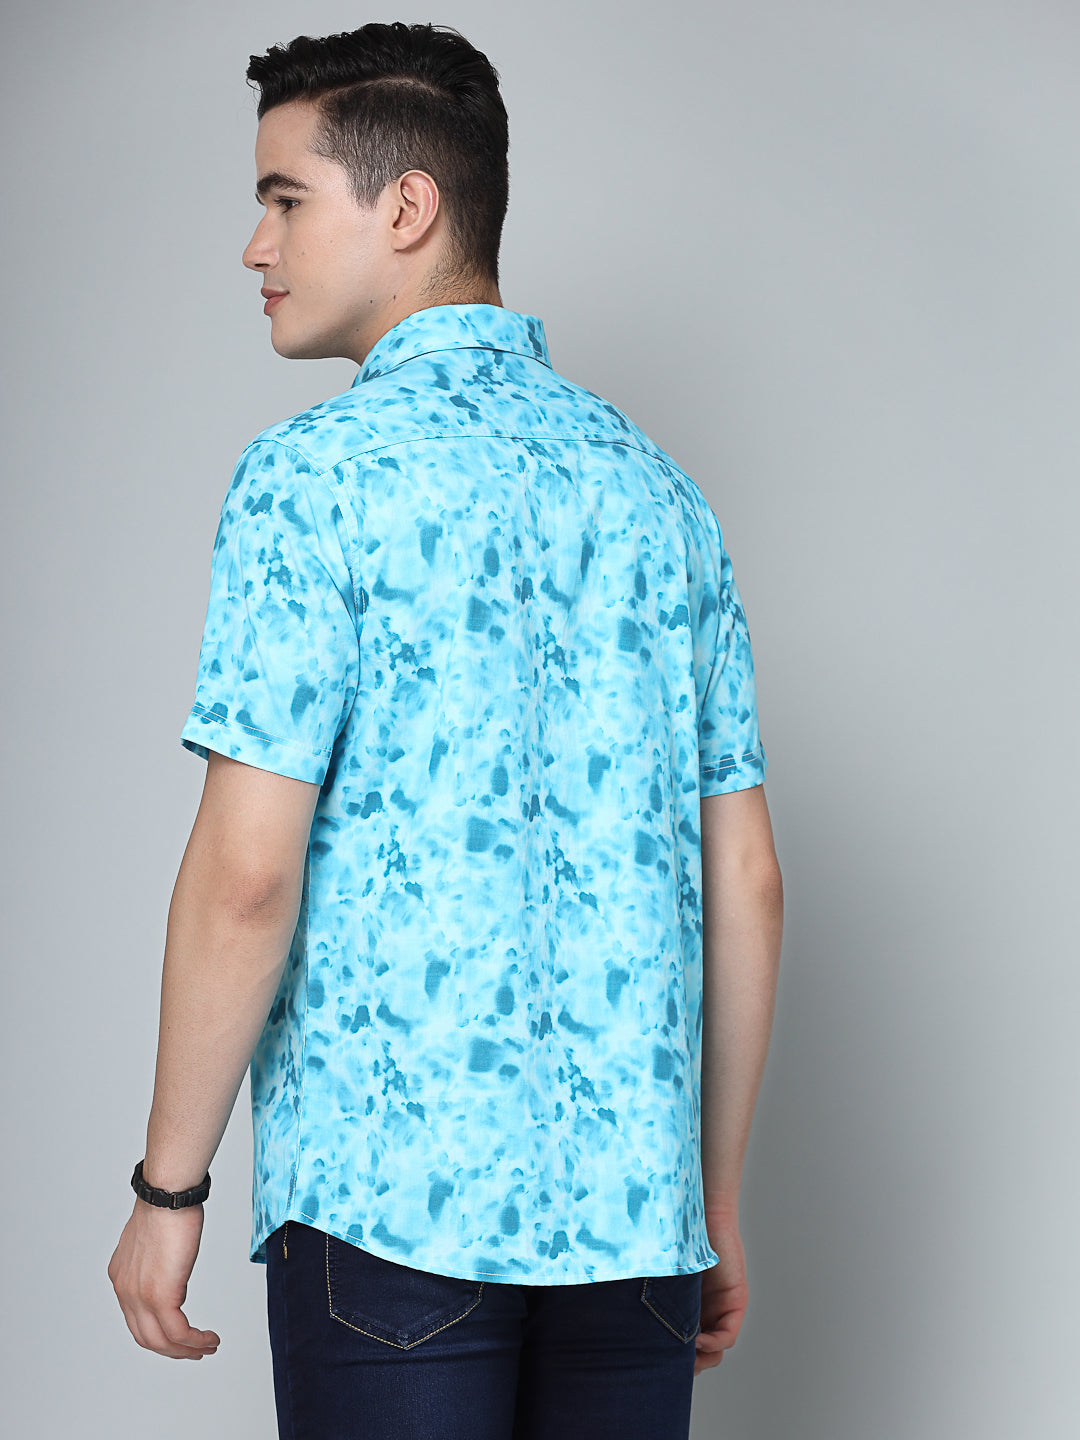 Valbone Men's Texture Printed Giza Cotton Casual Shirt